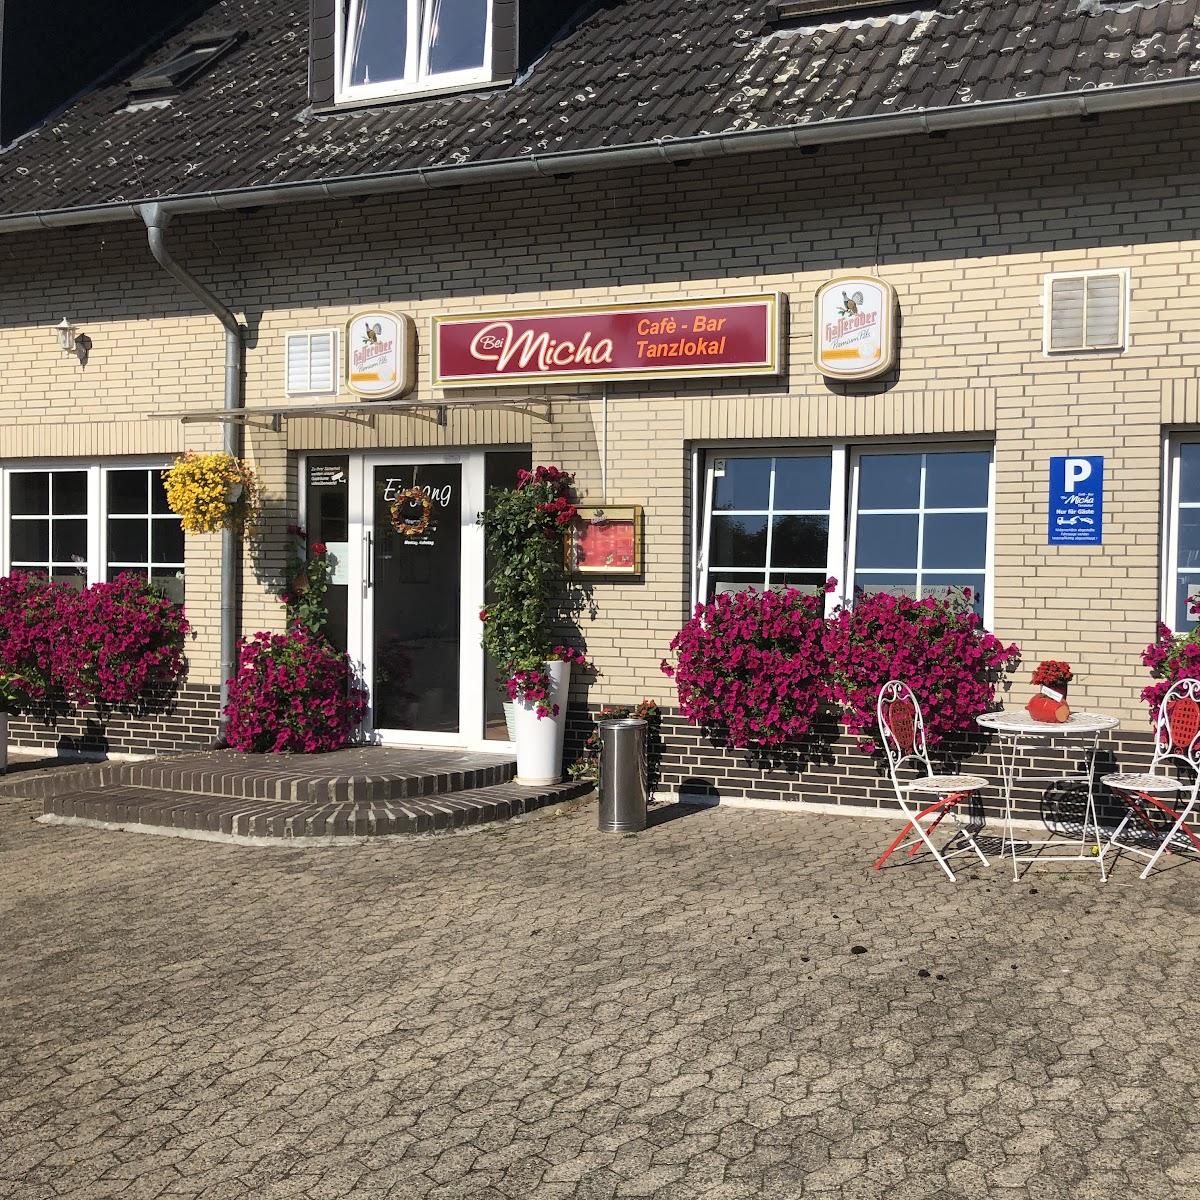 Restaurant "Tanzlokal Bei Micha" in Gifhorn